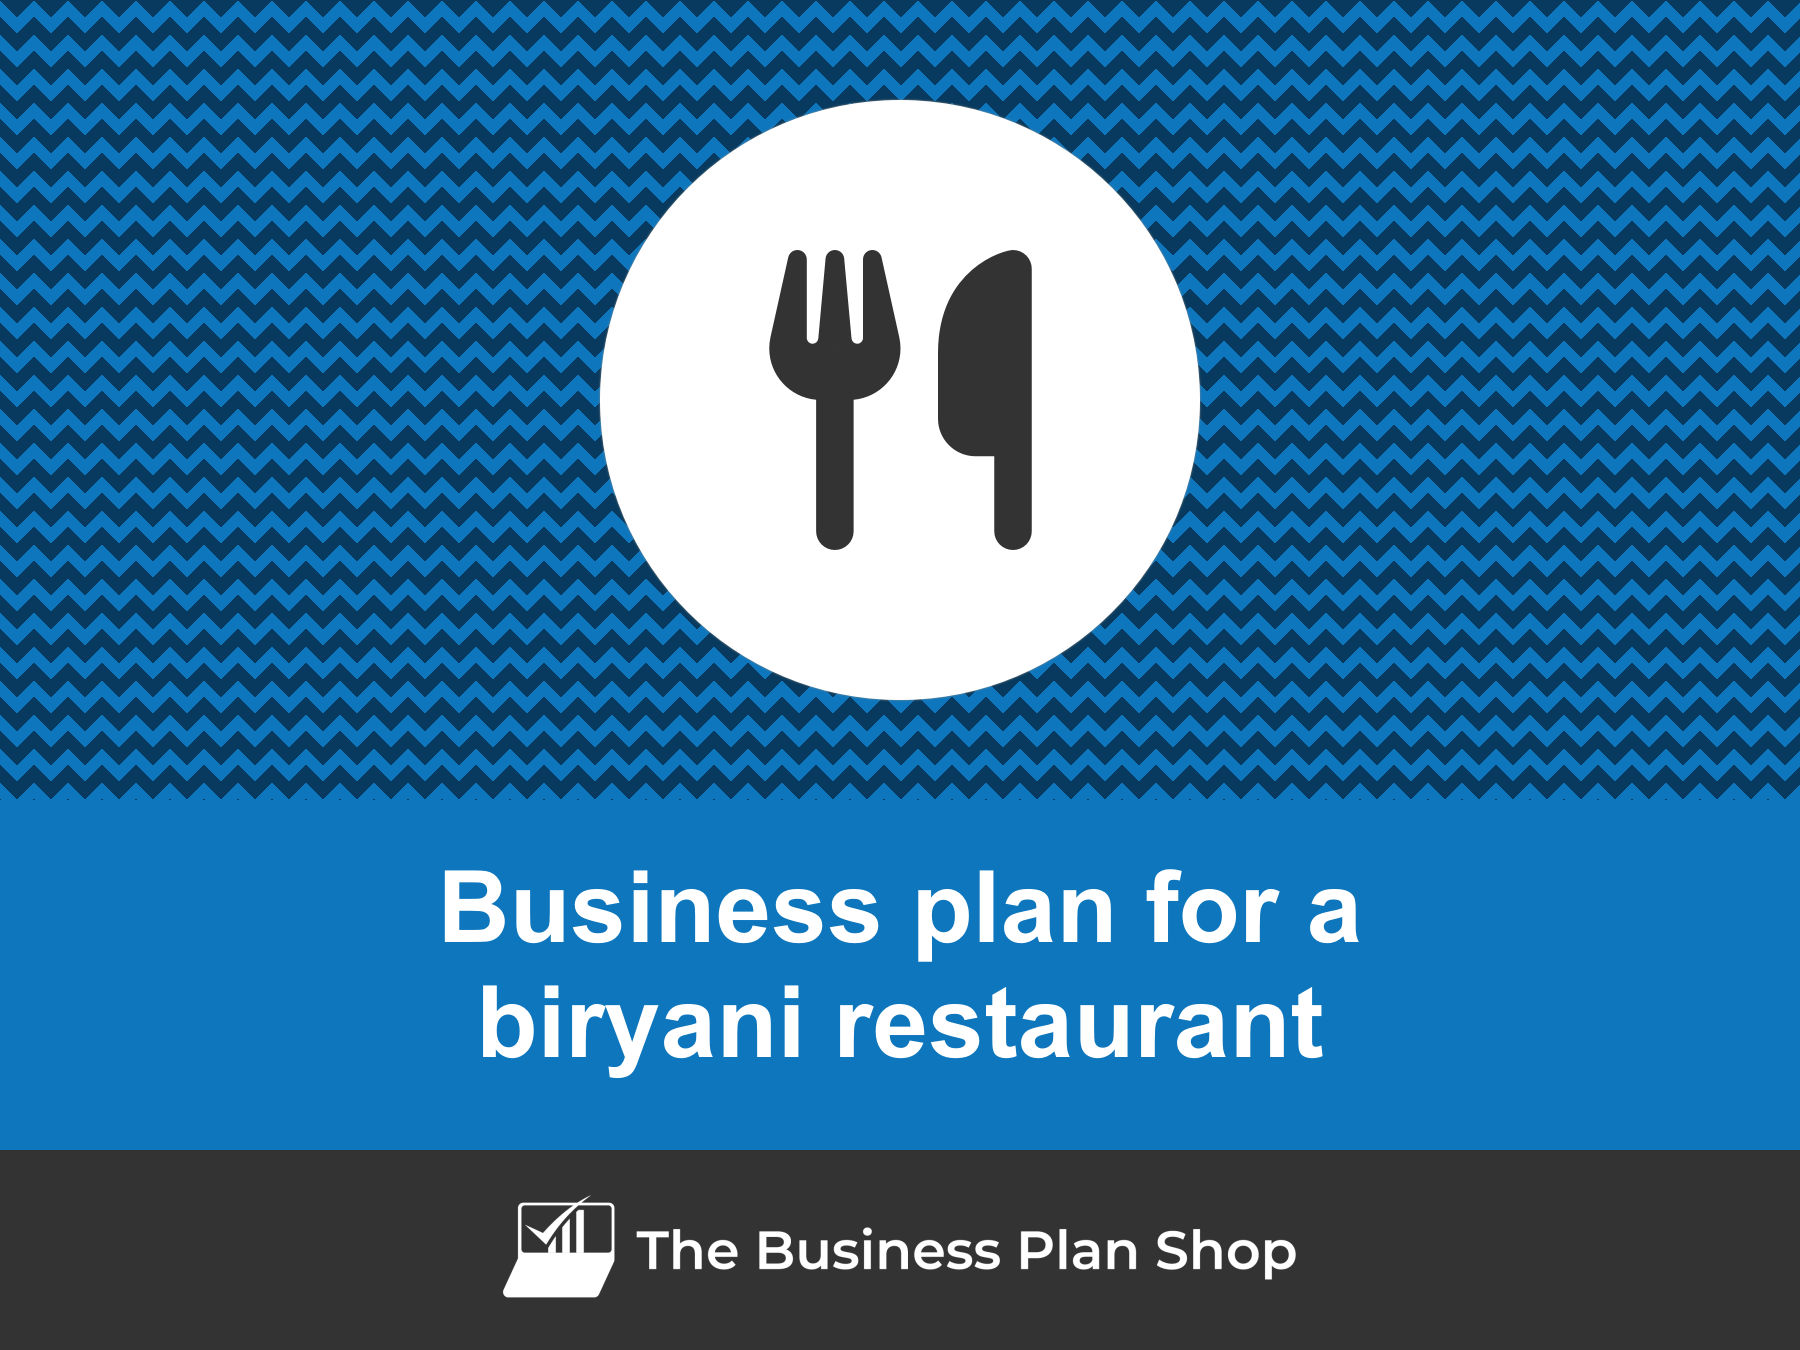 biryani home delivery business plan